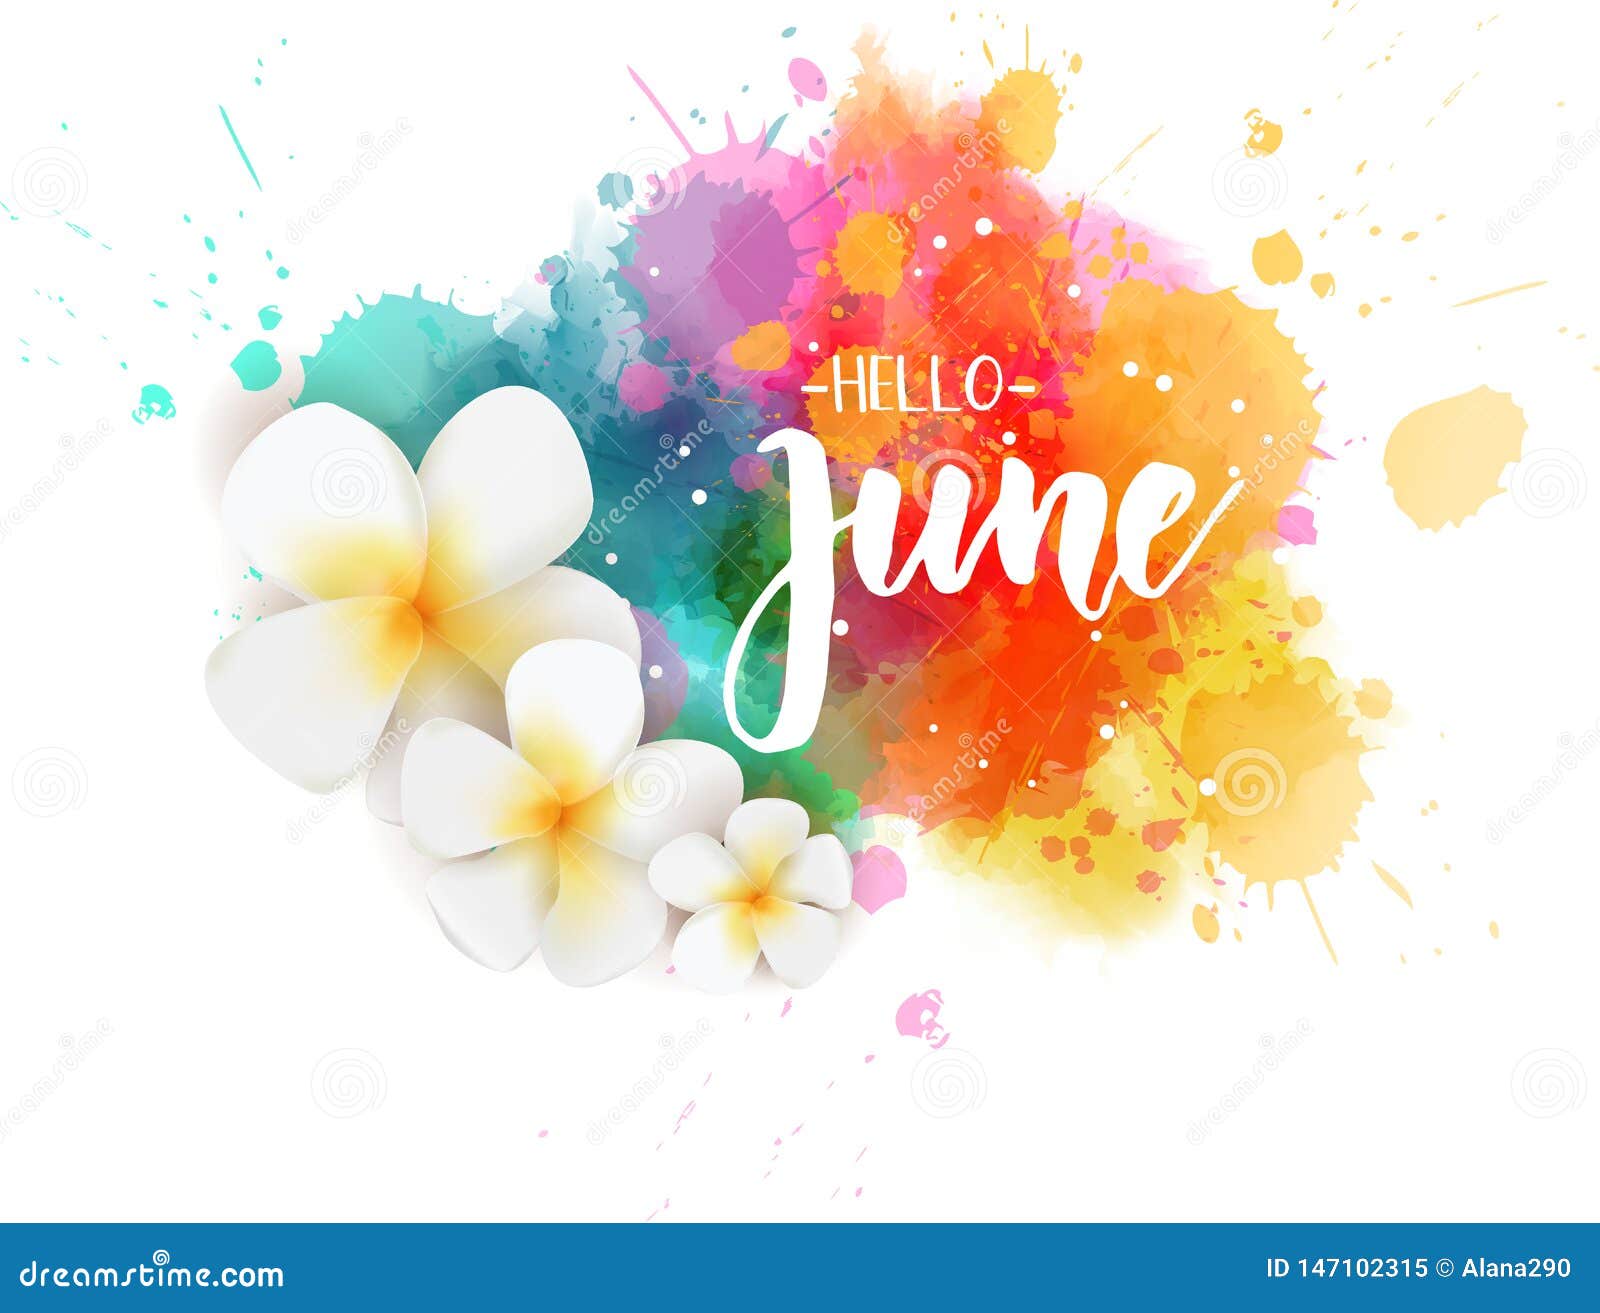 hello june - floral summer concept background